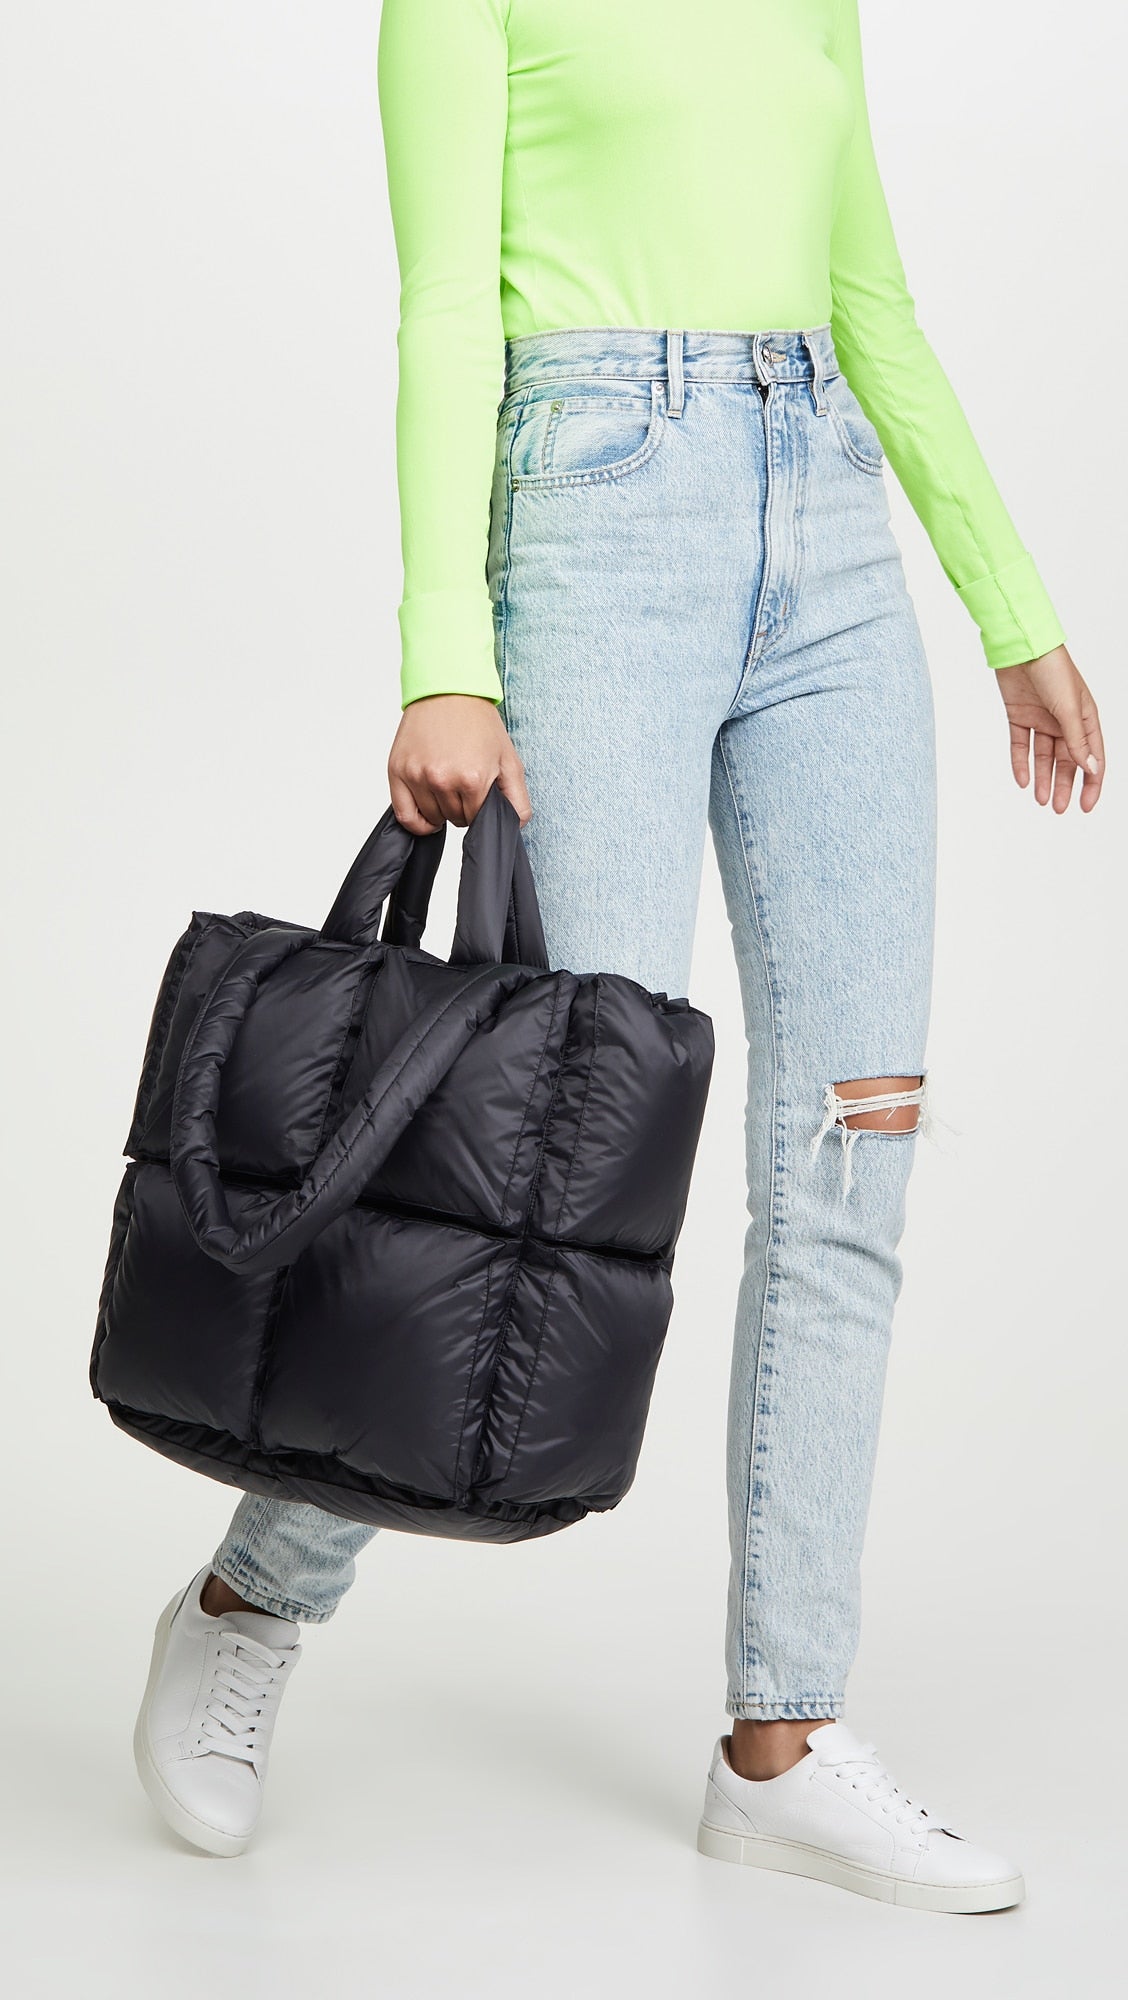 Checkerboard Puffer Tote Handbag and Shoulder Bag